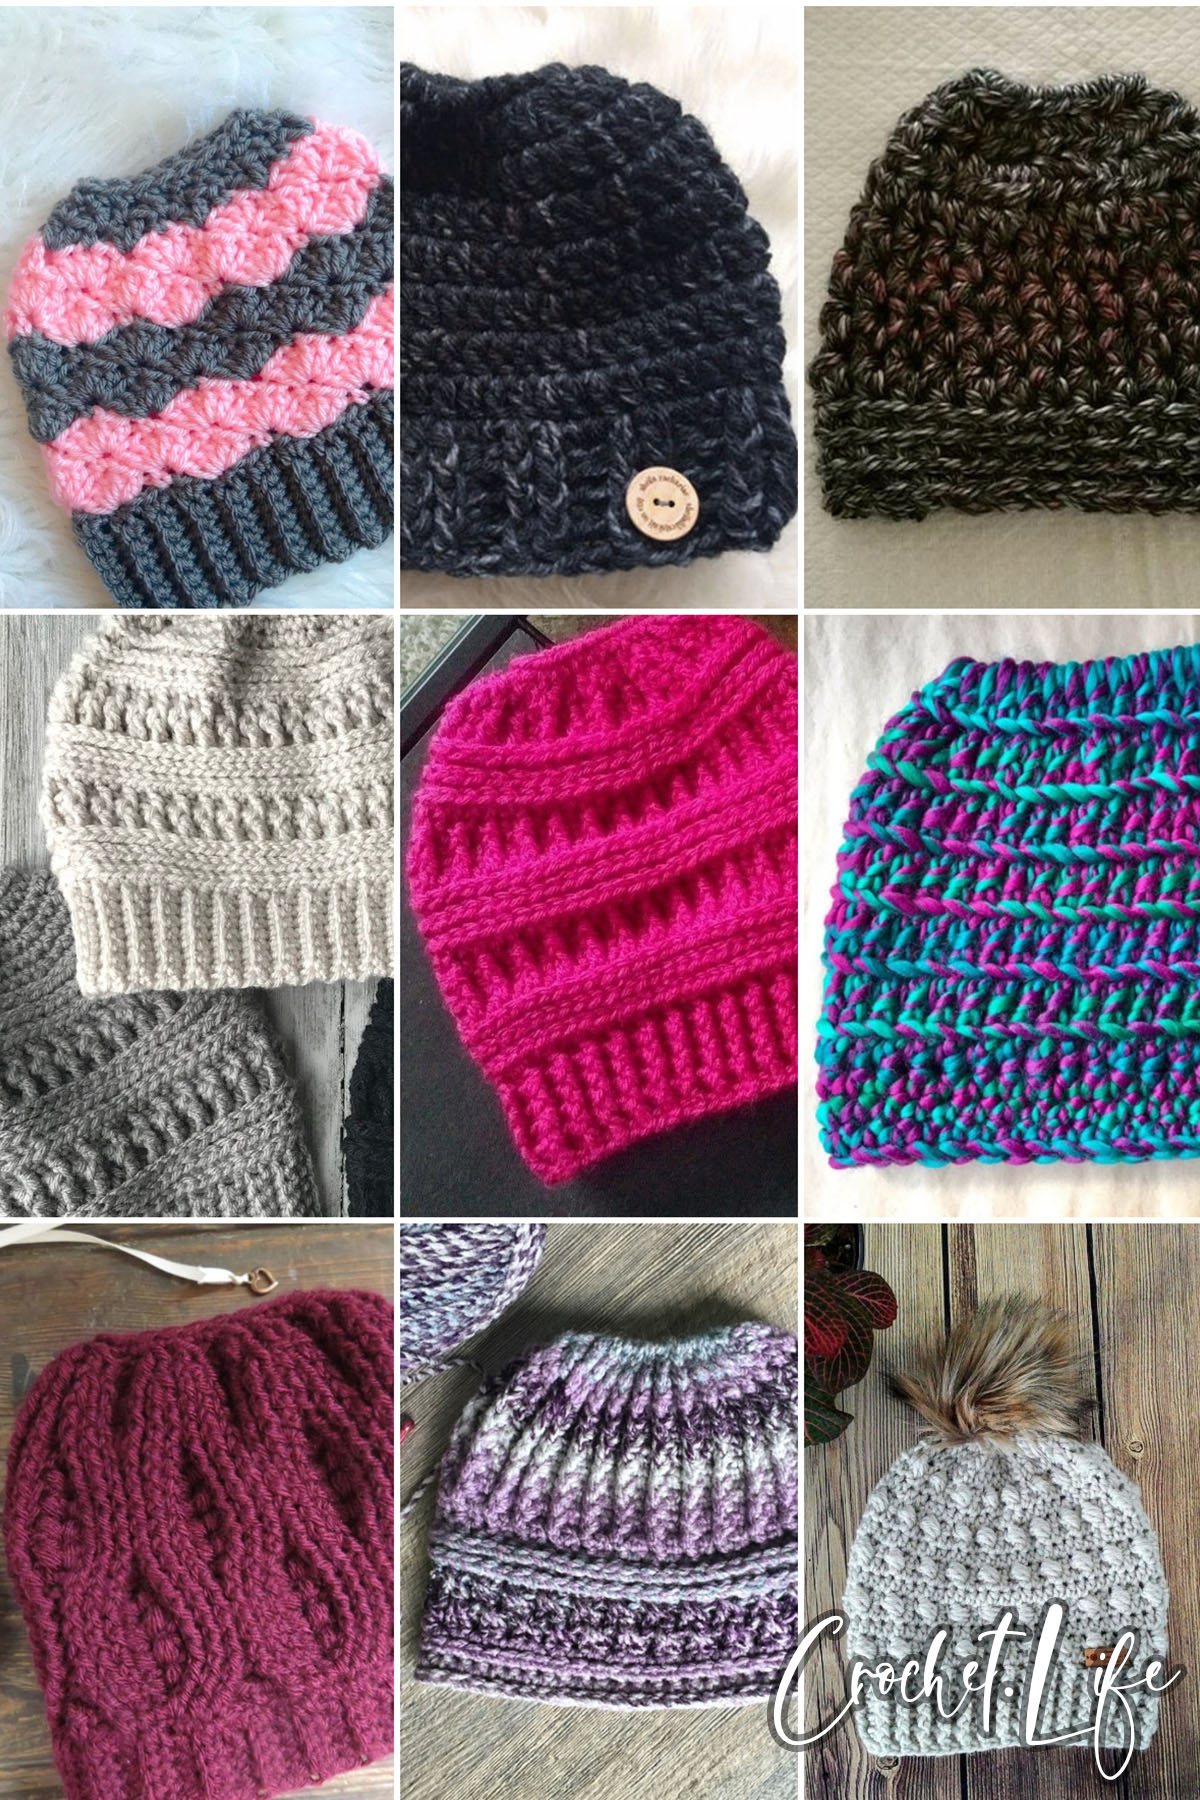 Crochet Lightweight Messy Bun Hat pink and purple